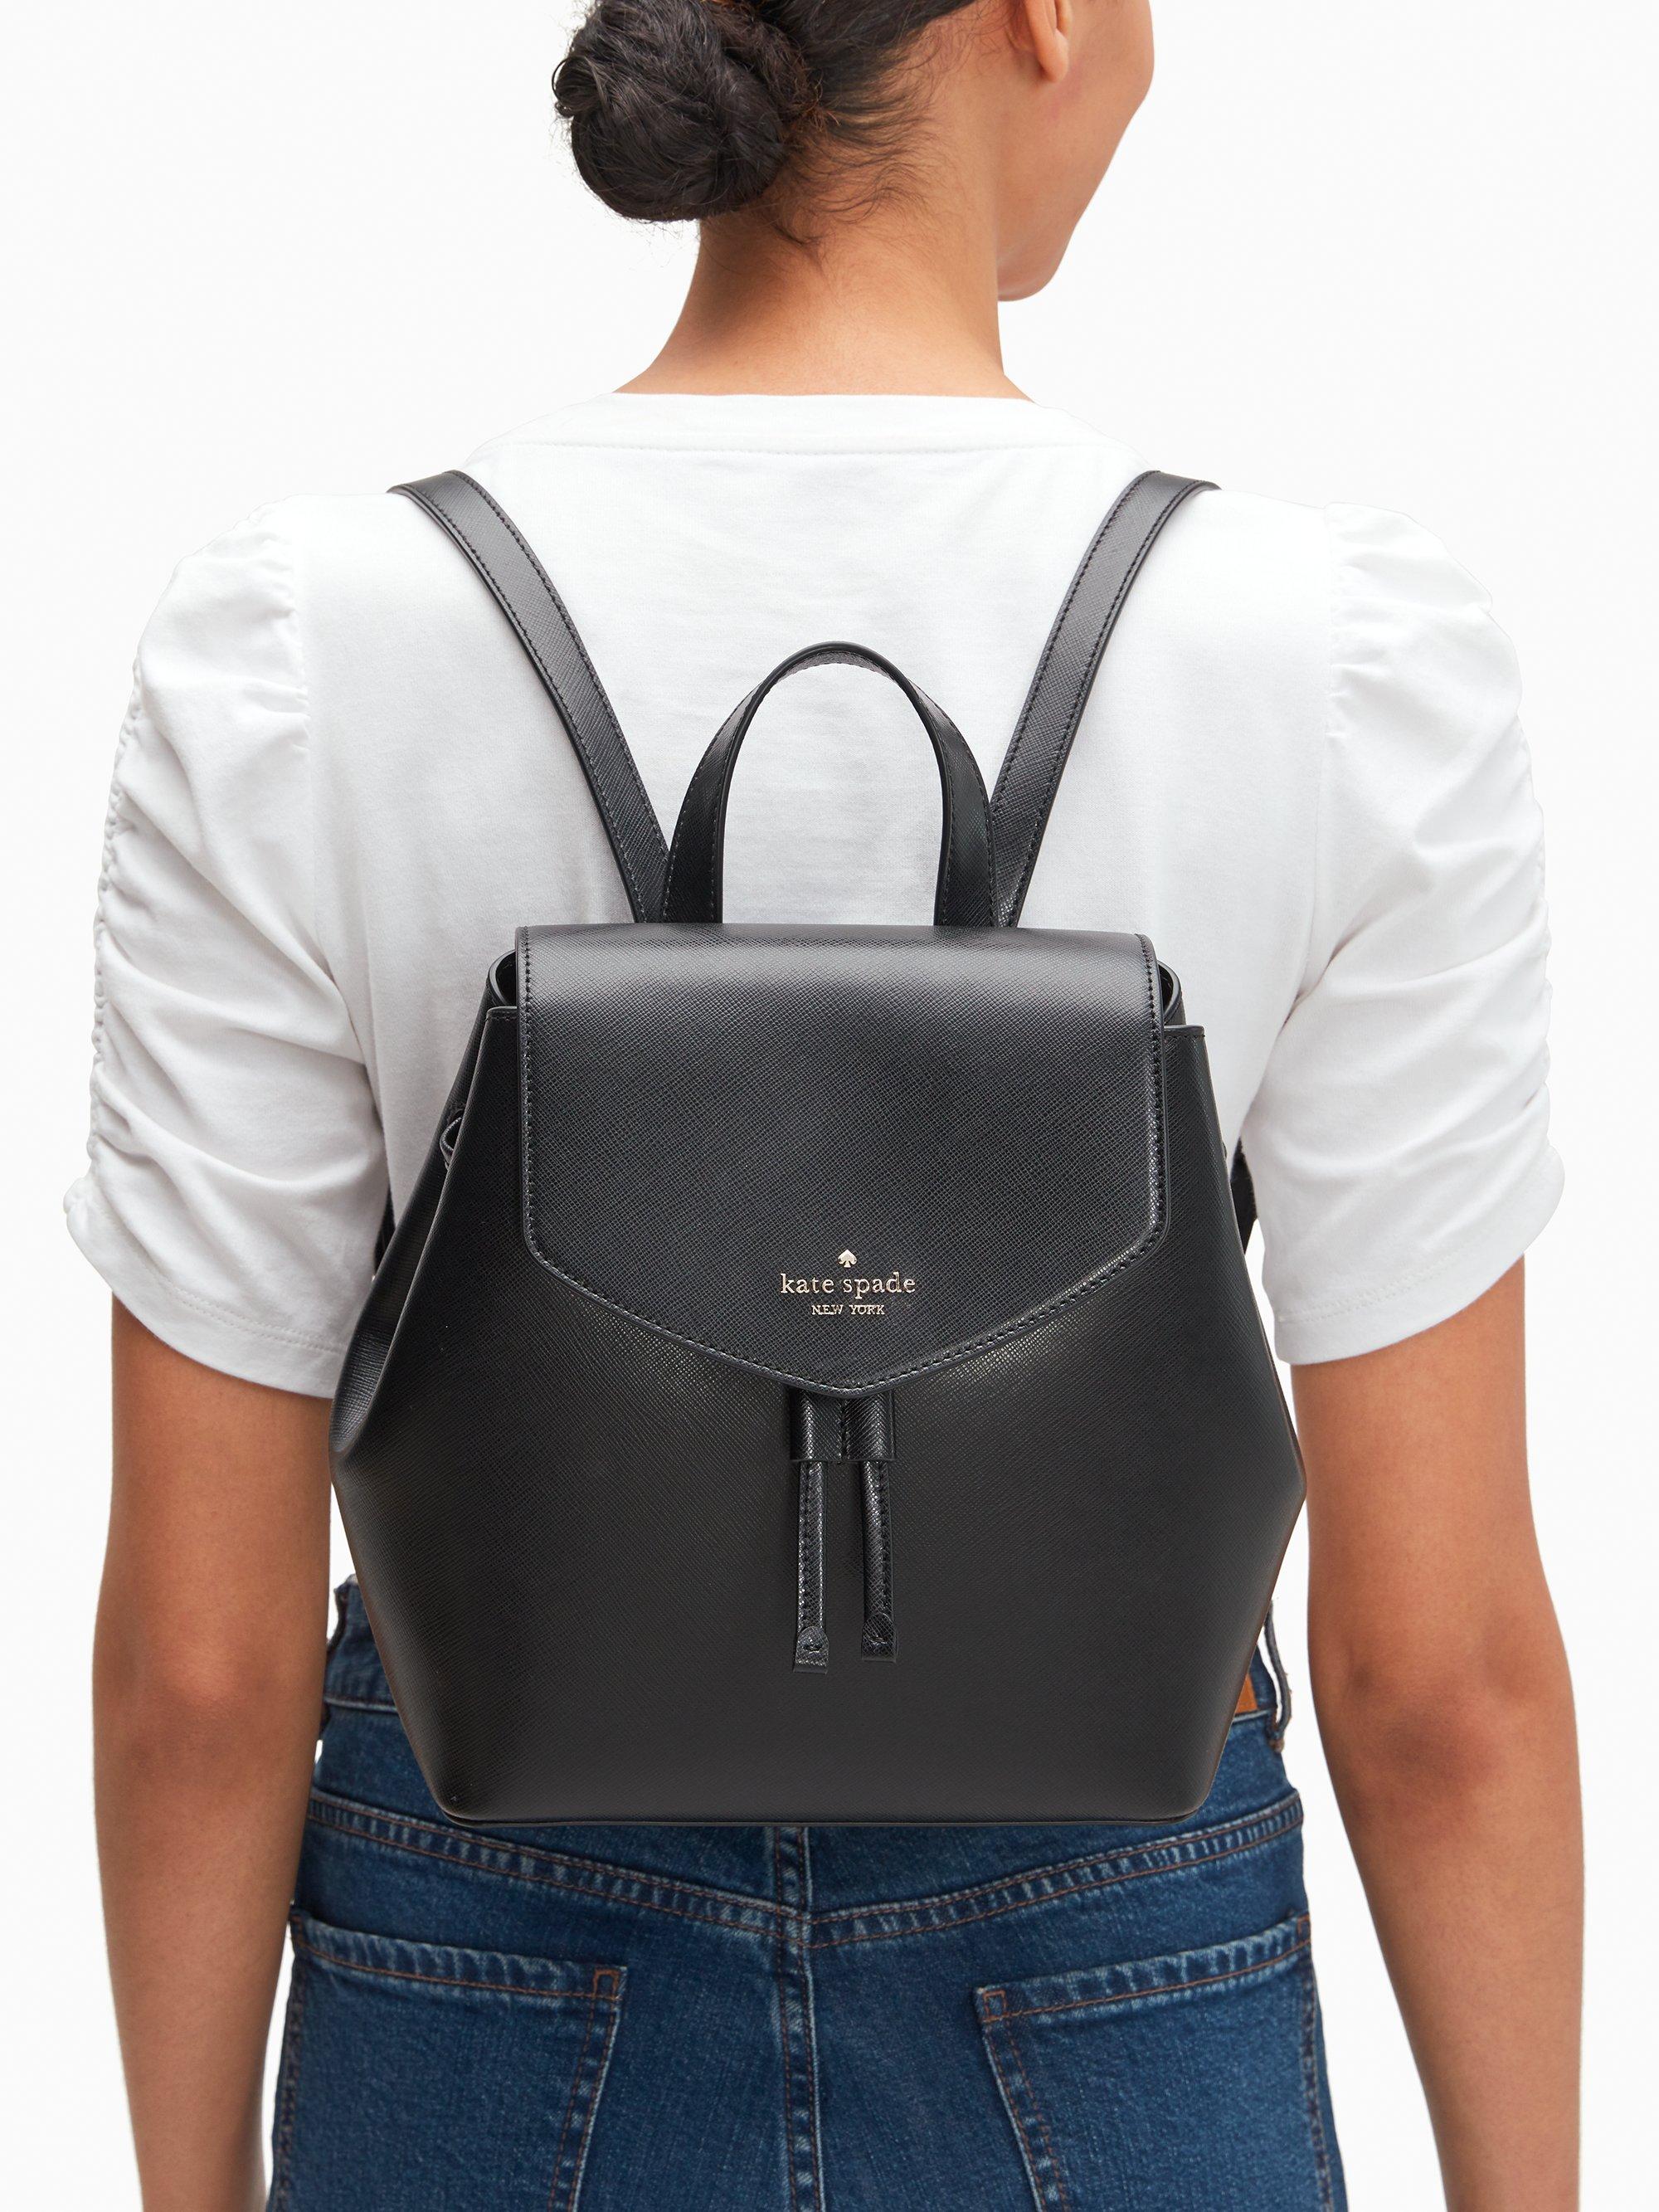 Kate Spade Leather Lizzie Medium Flap Backpack in Black | Lyst